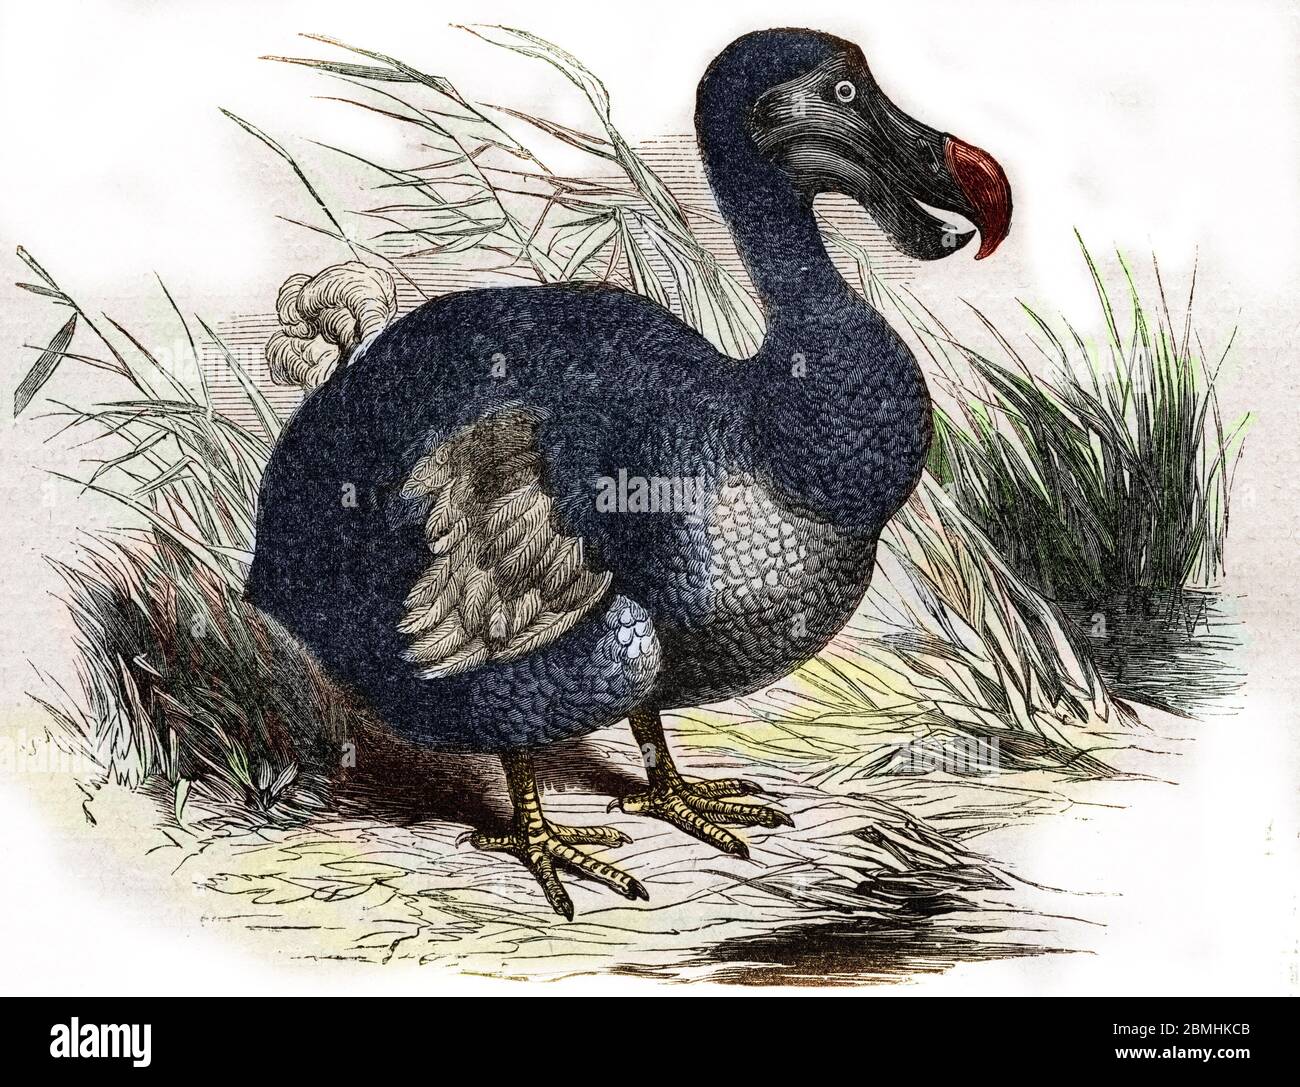 Ornithologie : le dodo ou dronte de Maurice, animal disparu - Gravure - Dodo, Raphus cucullatus, Didus ineptus, ausgestorbener flugloser Vogel - Gravur 18 Stockfoto